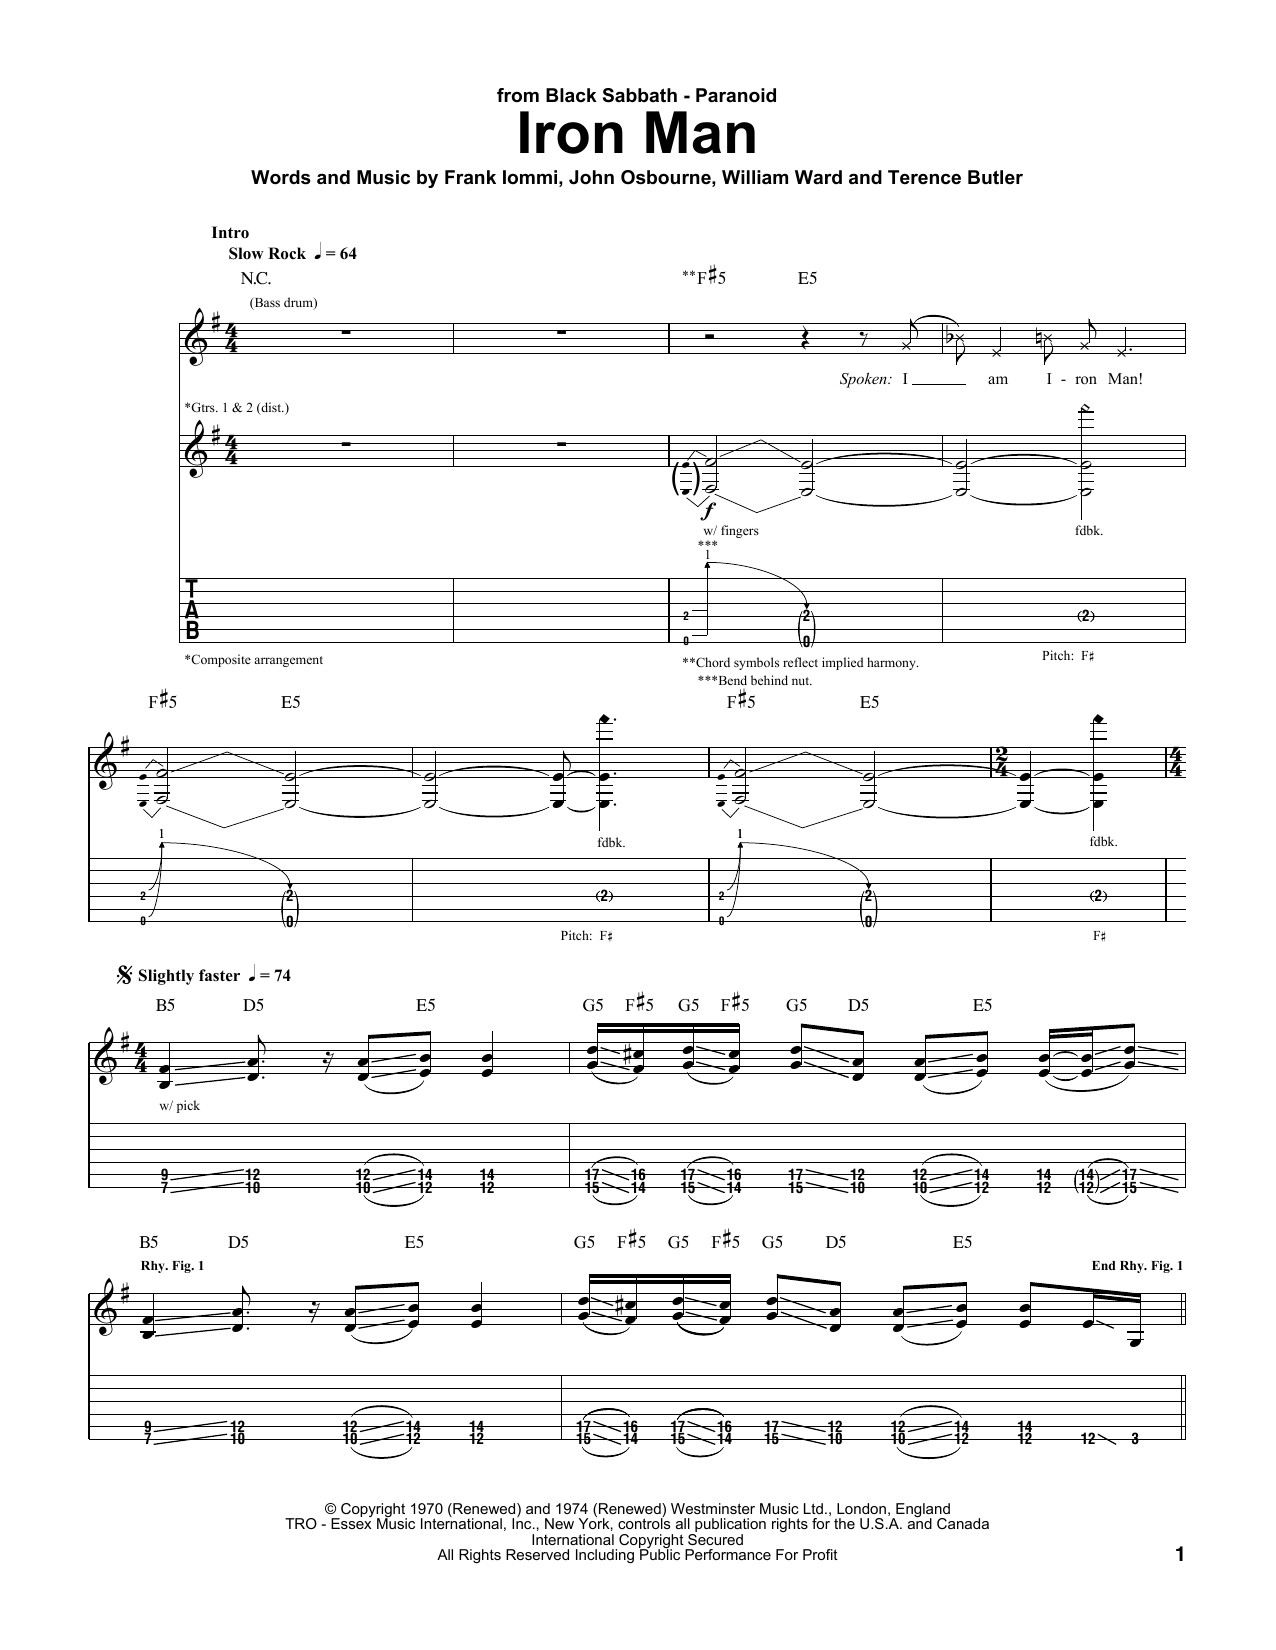 Black Sabbath Iron Man Sheet Music Notes & Chords for Drums Transcription - Download or Print PDF